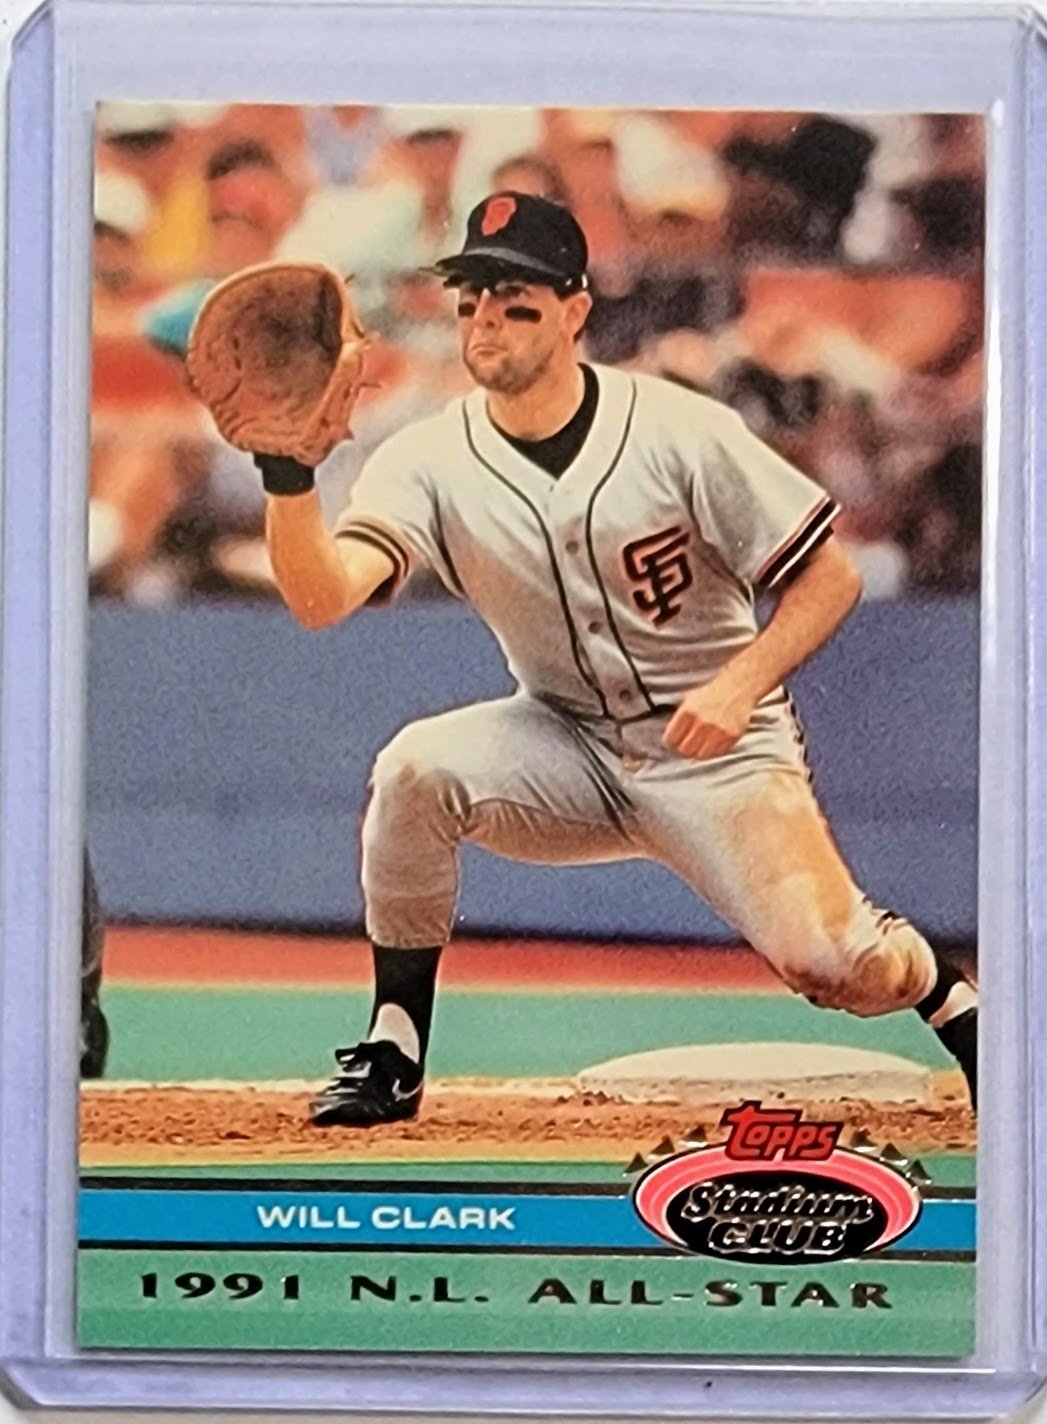 1992 Topps Stadium Club Dome Ryne Sandberg 1991 National League All Star  MLB Baseball Trading Card TPTV